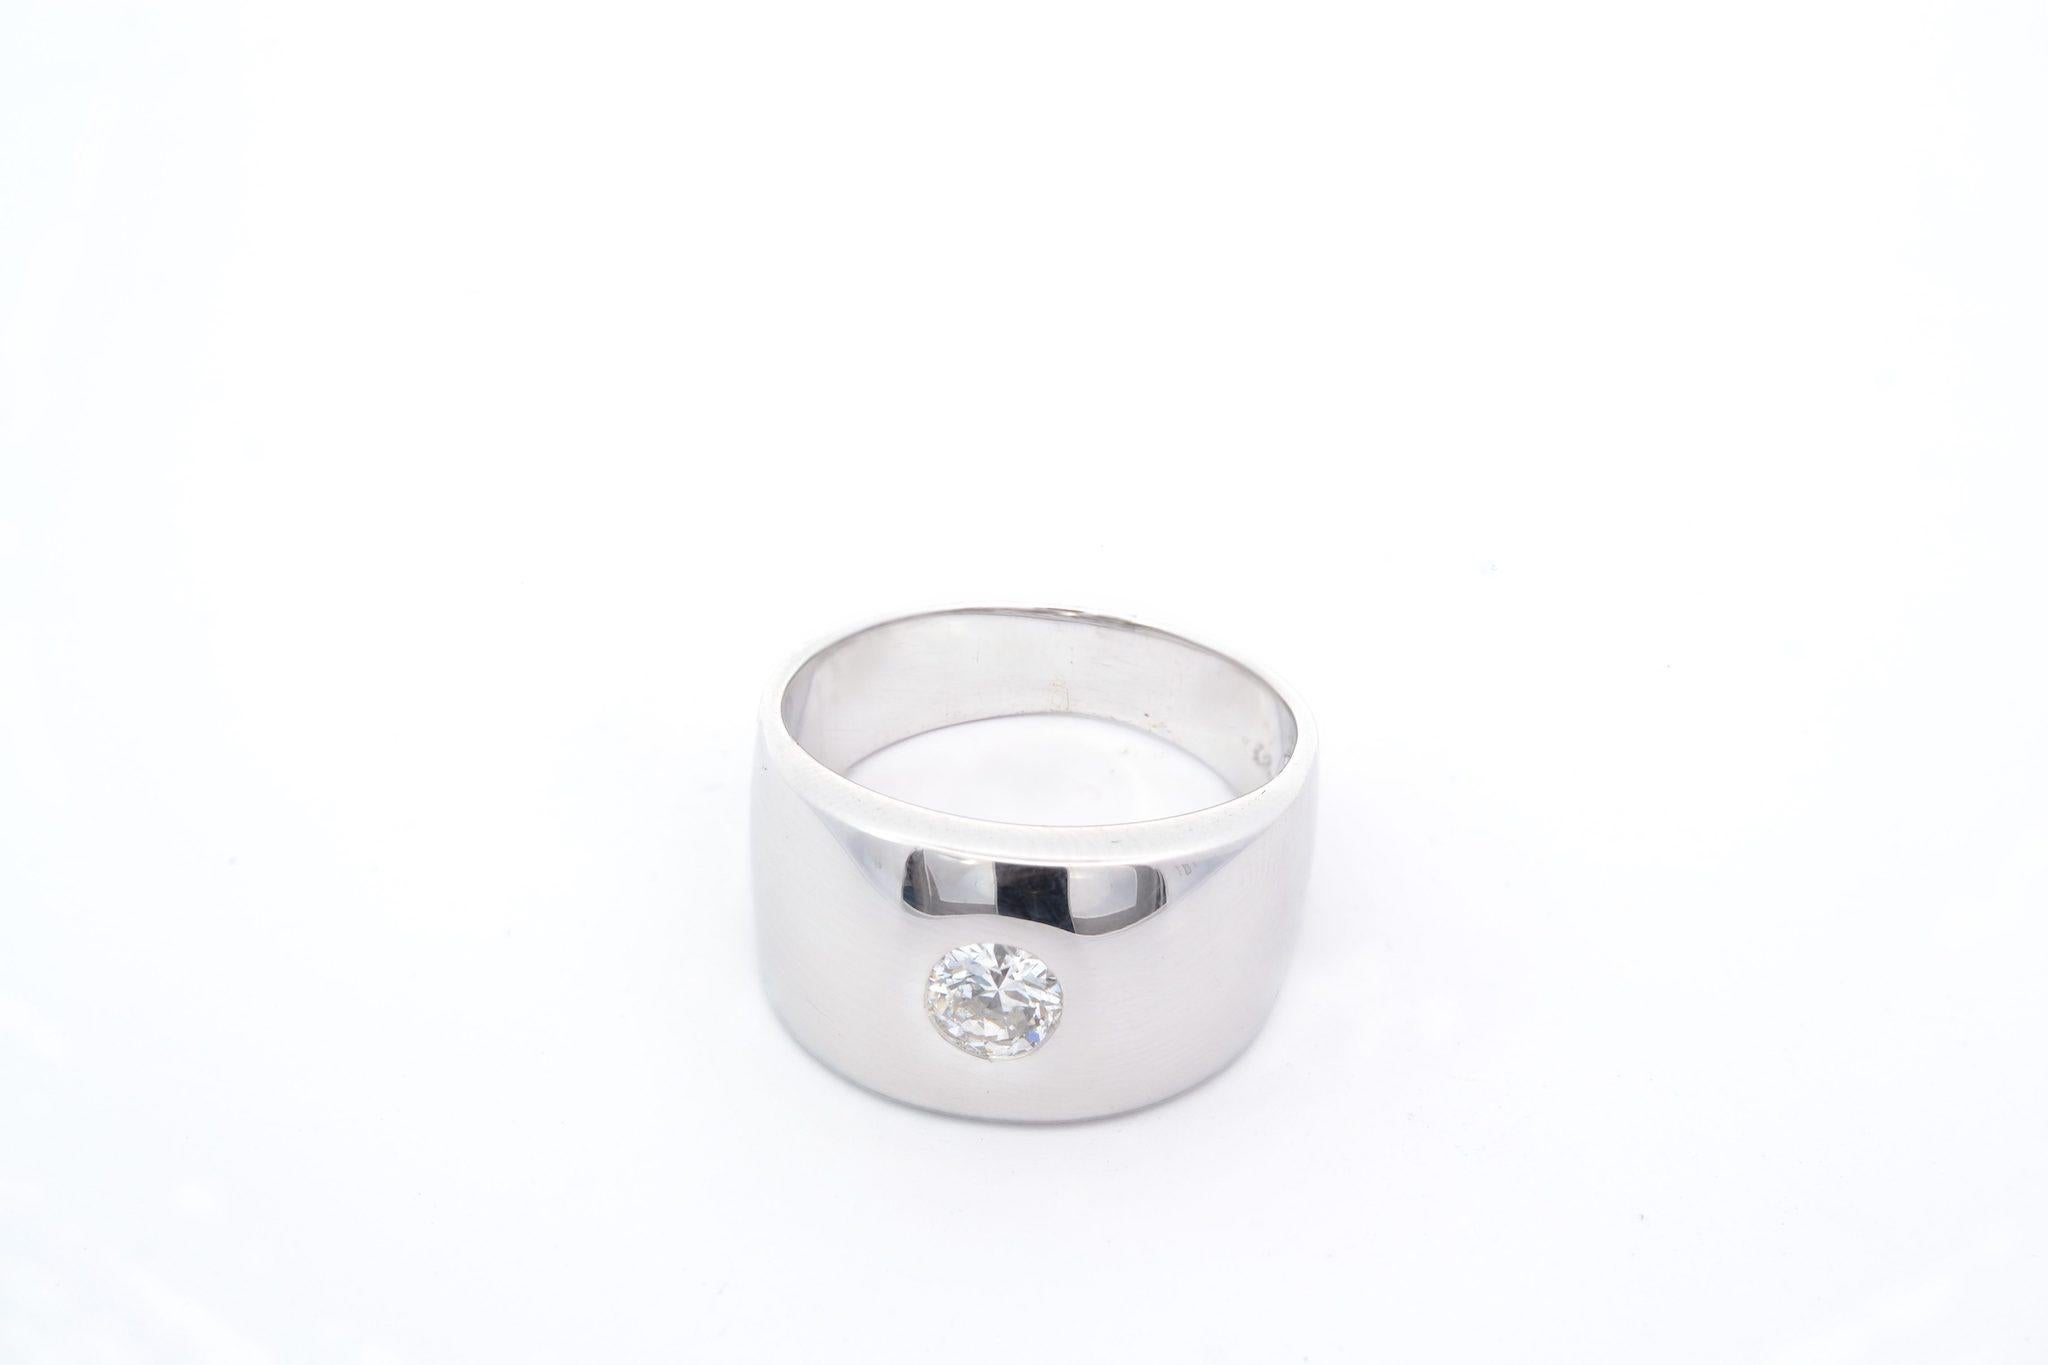 Brilliant Cut 0.45 carat diamond ring in 18k white gold For Sale